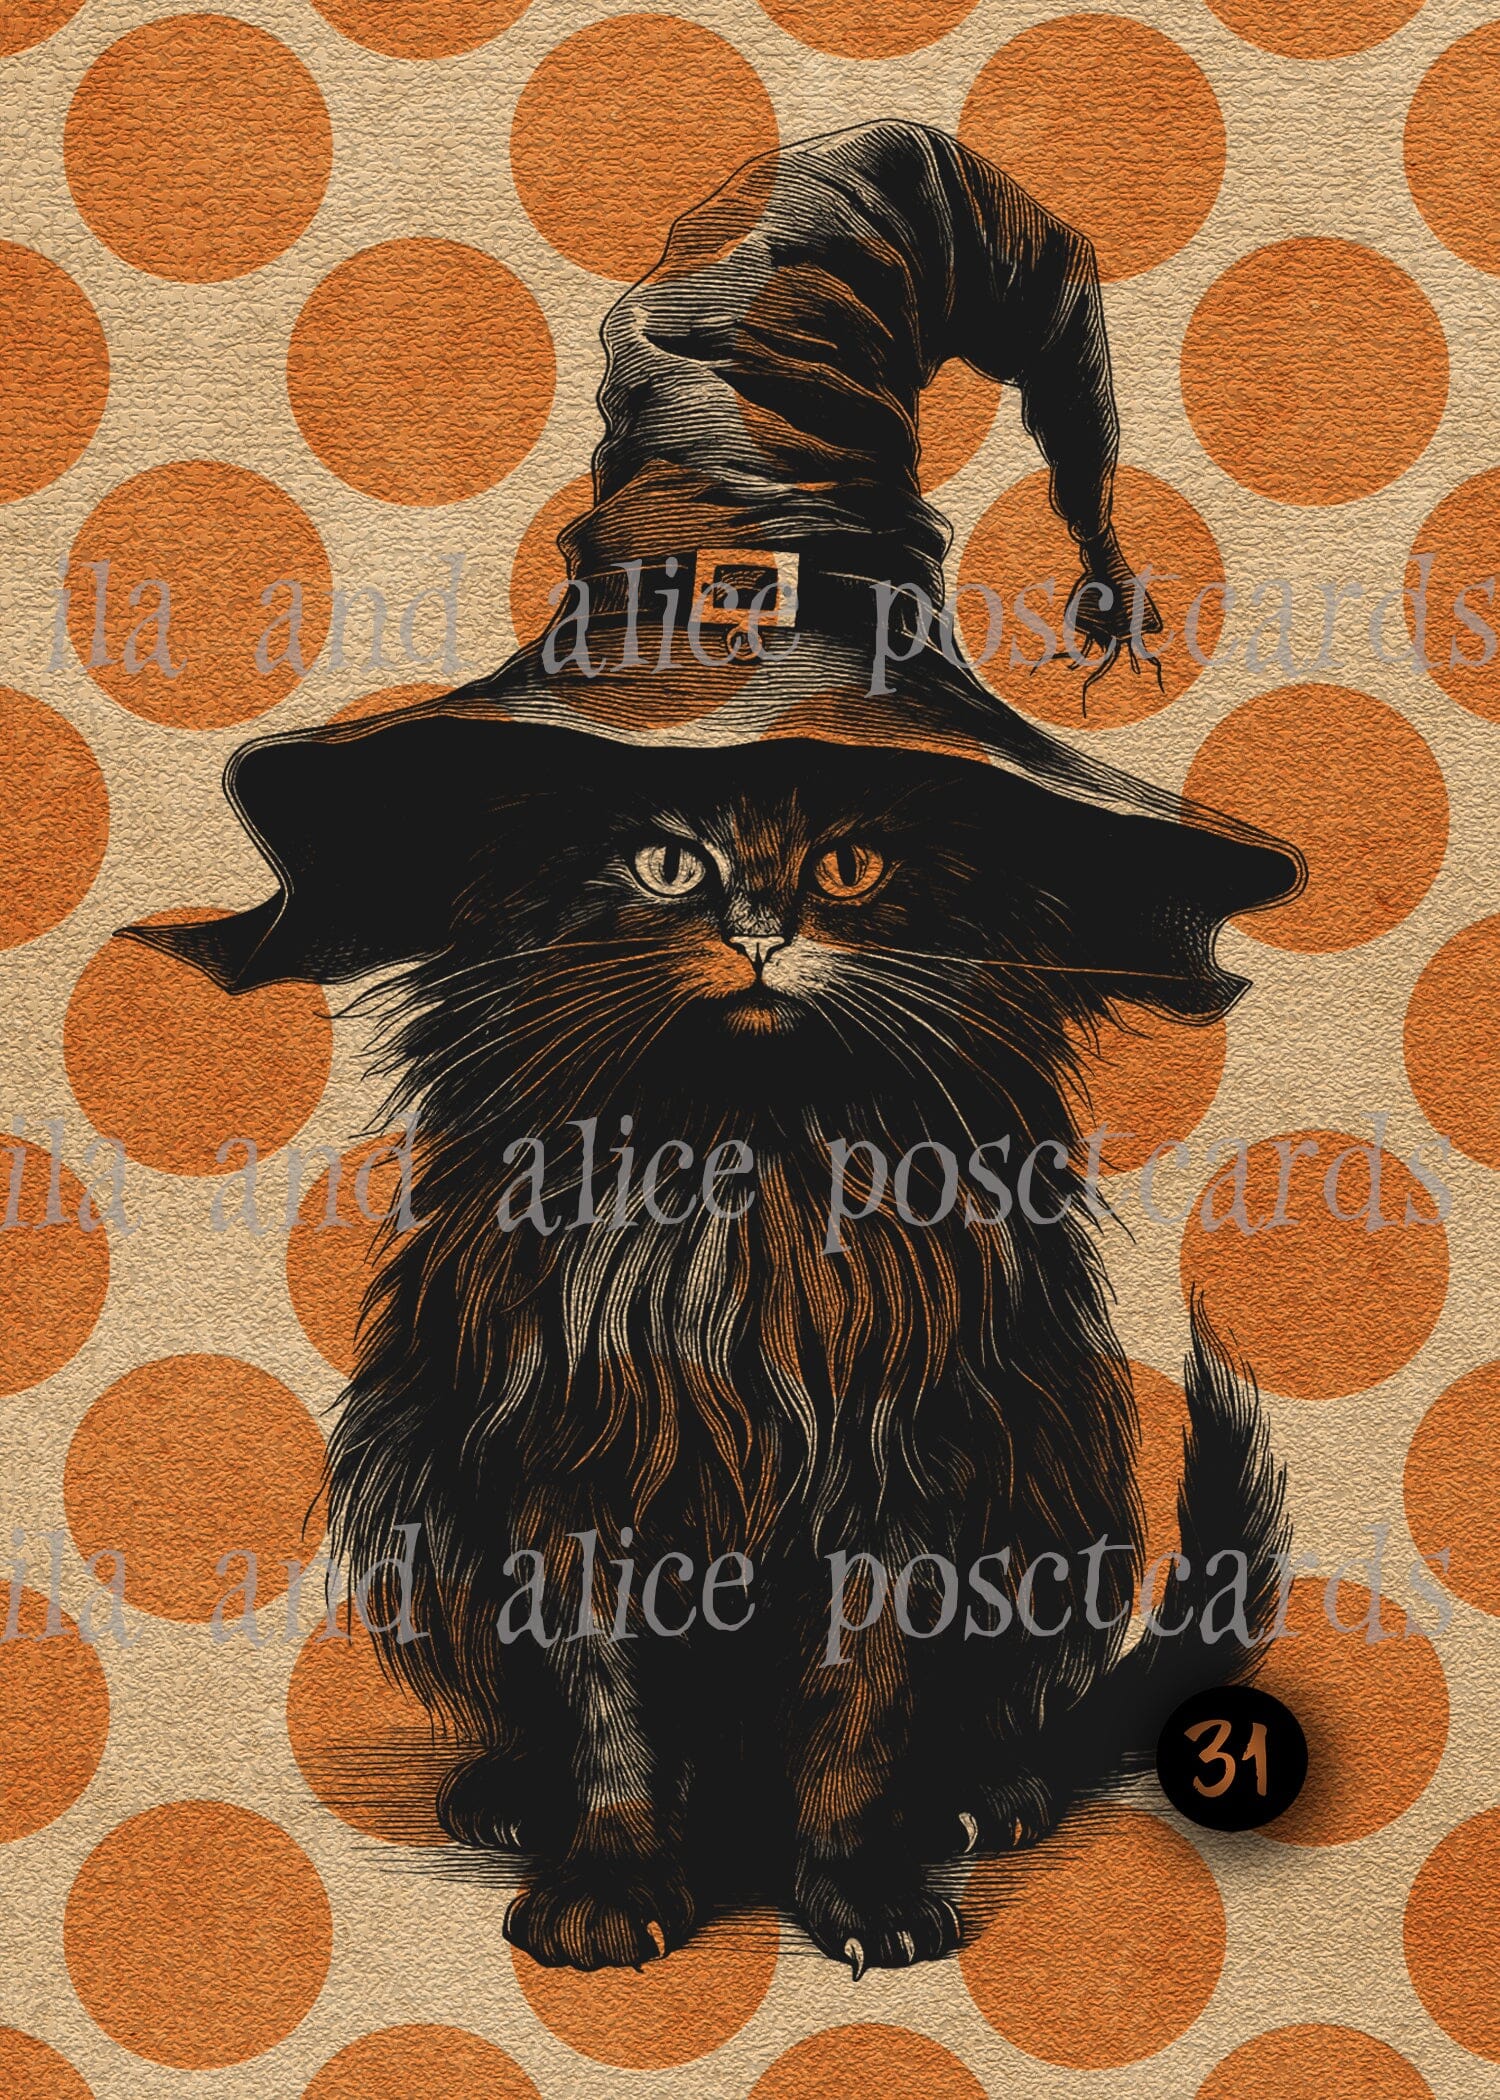 Black Cats and Orange Polka Dots Halloween Postcards Post Cards ila & alice 